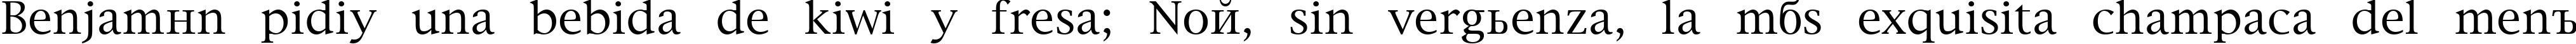 Пример написания шрифтом New York Plain:001.003 текста на испанском